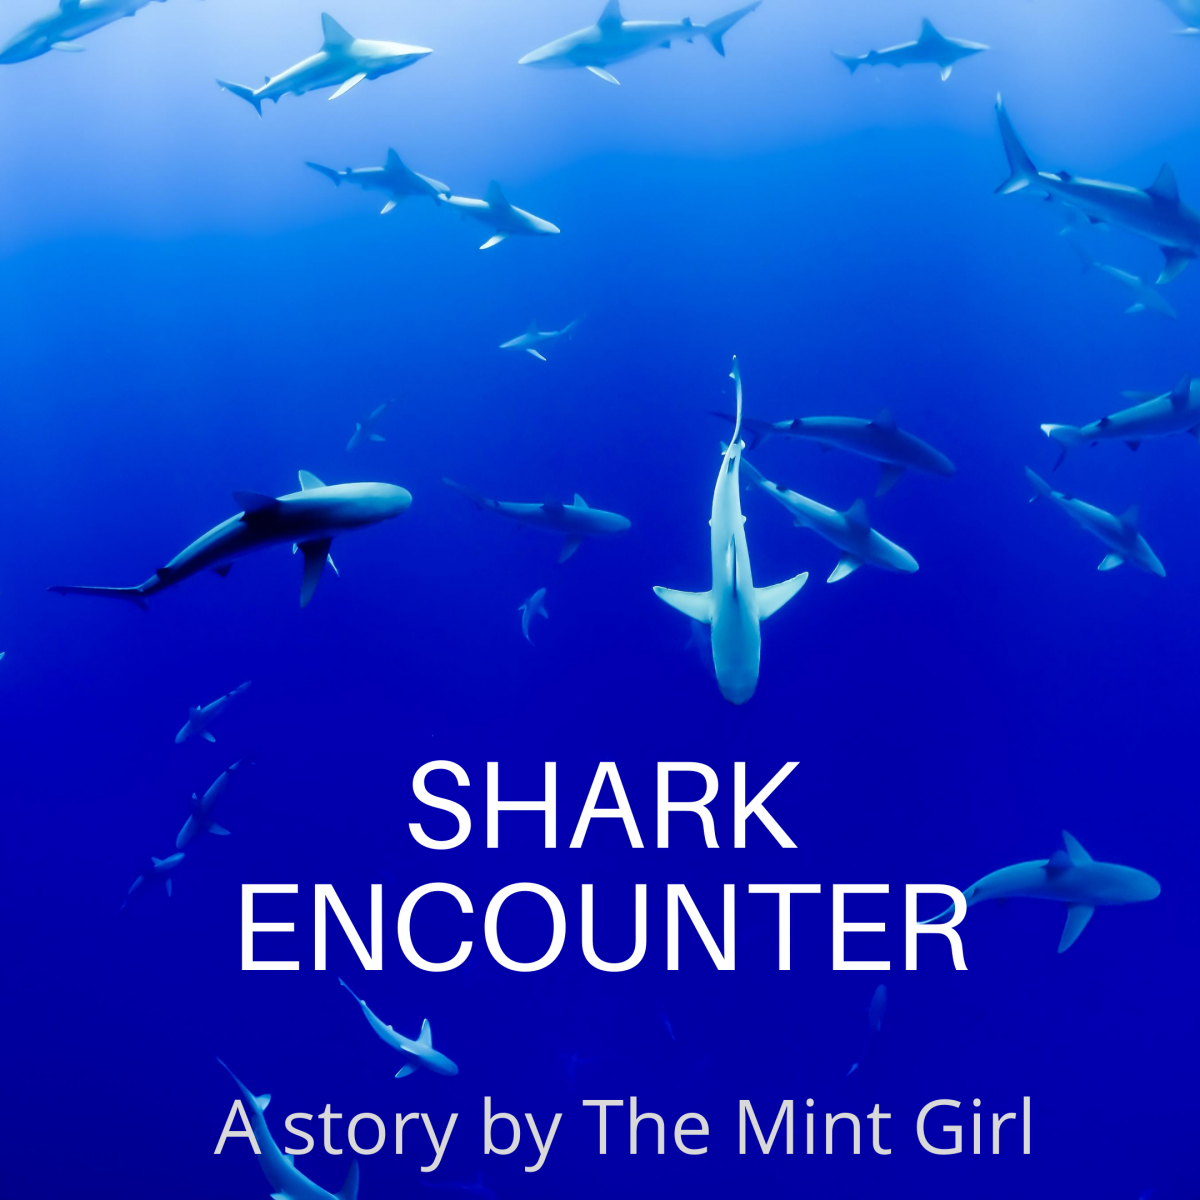 Shark Encounter by The Mint Girl